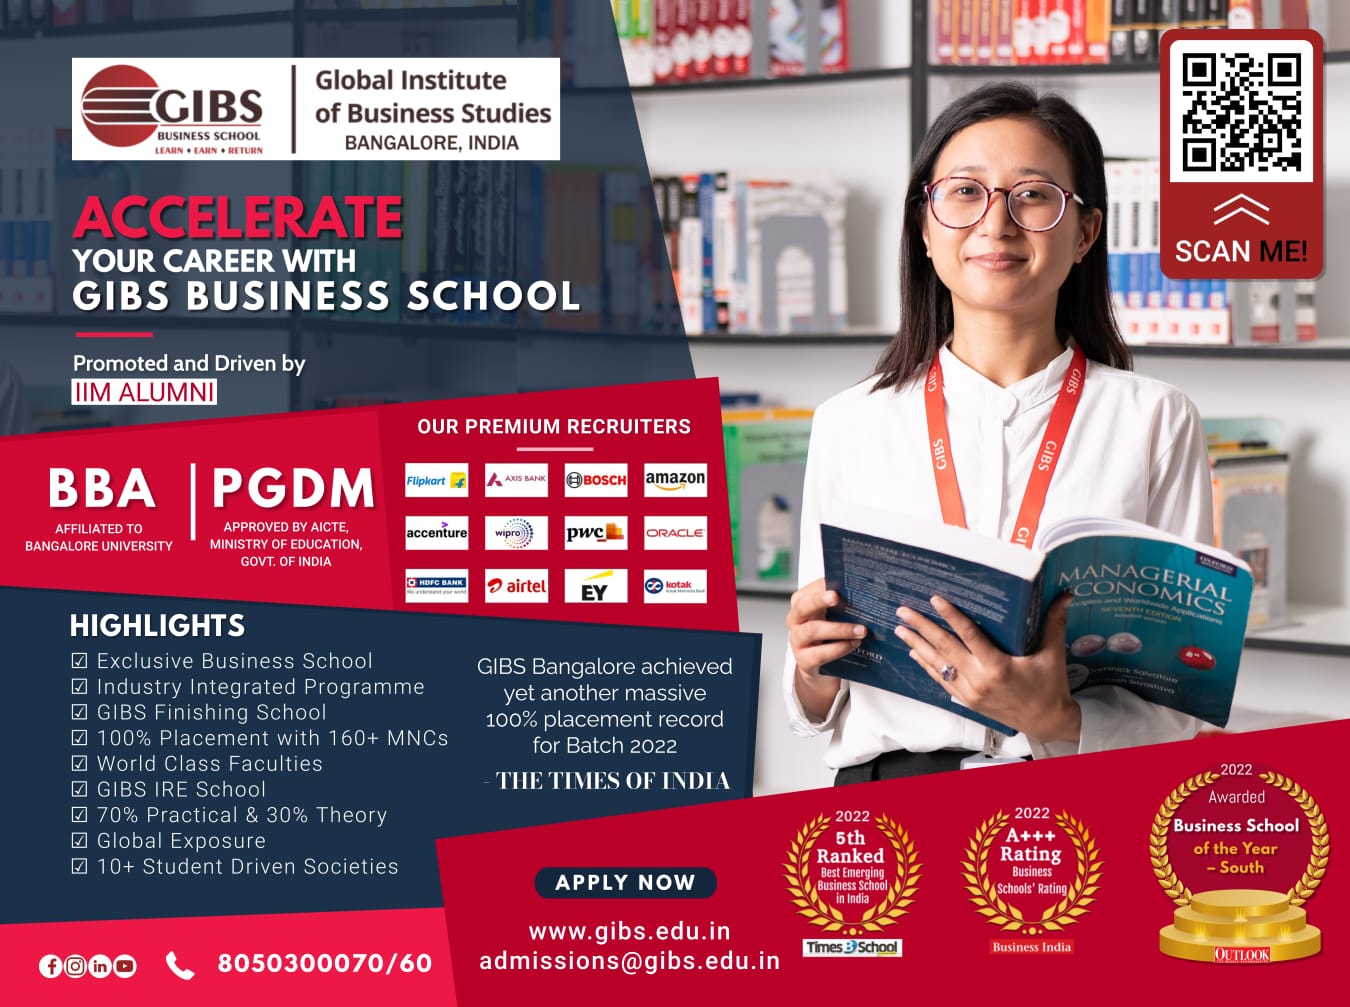 Global Institute of Business Studies (GIBS)
